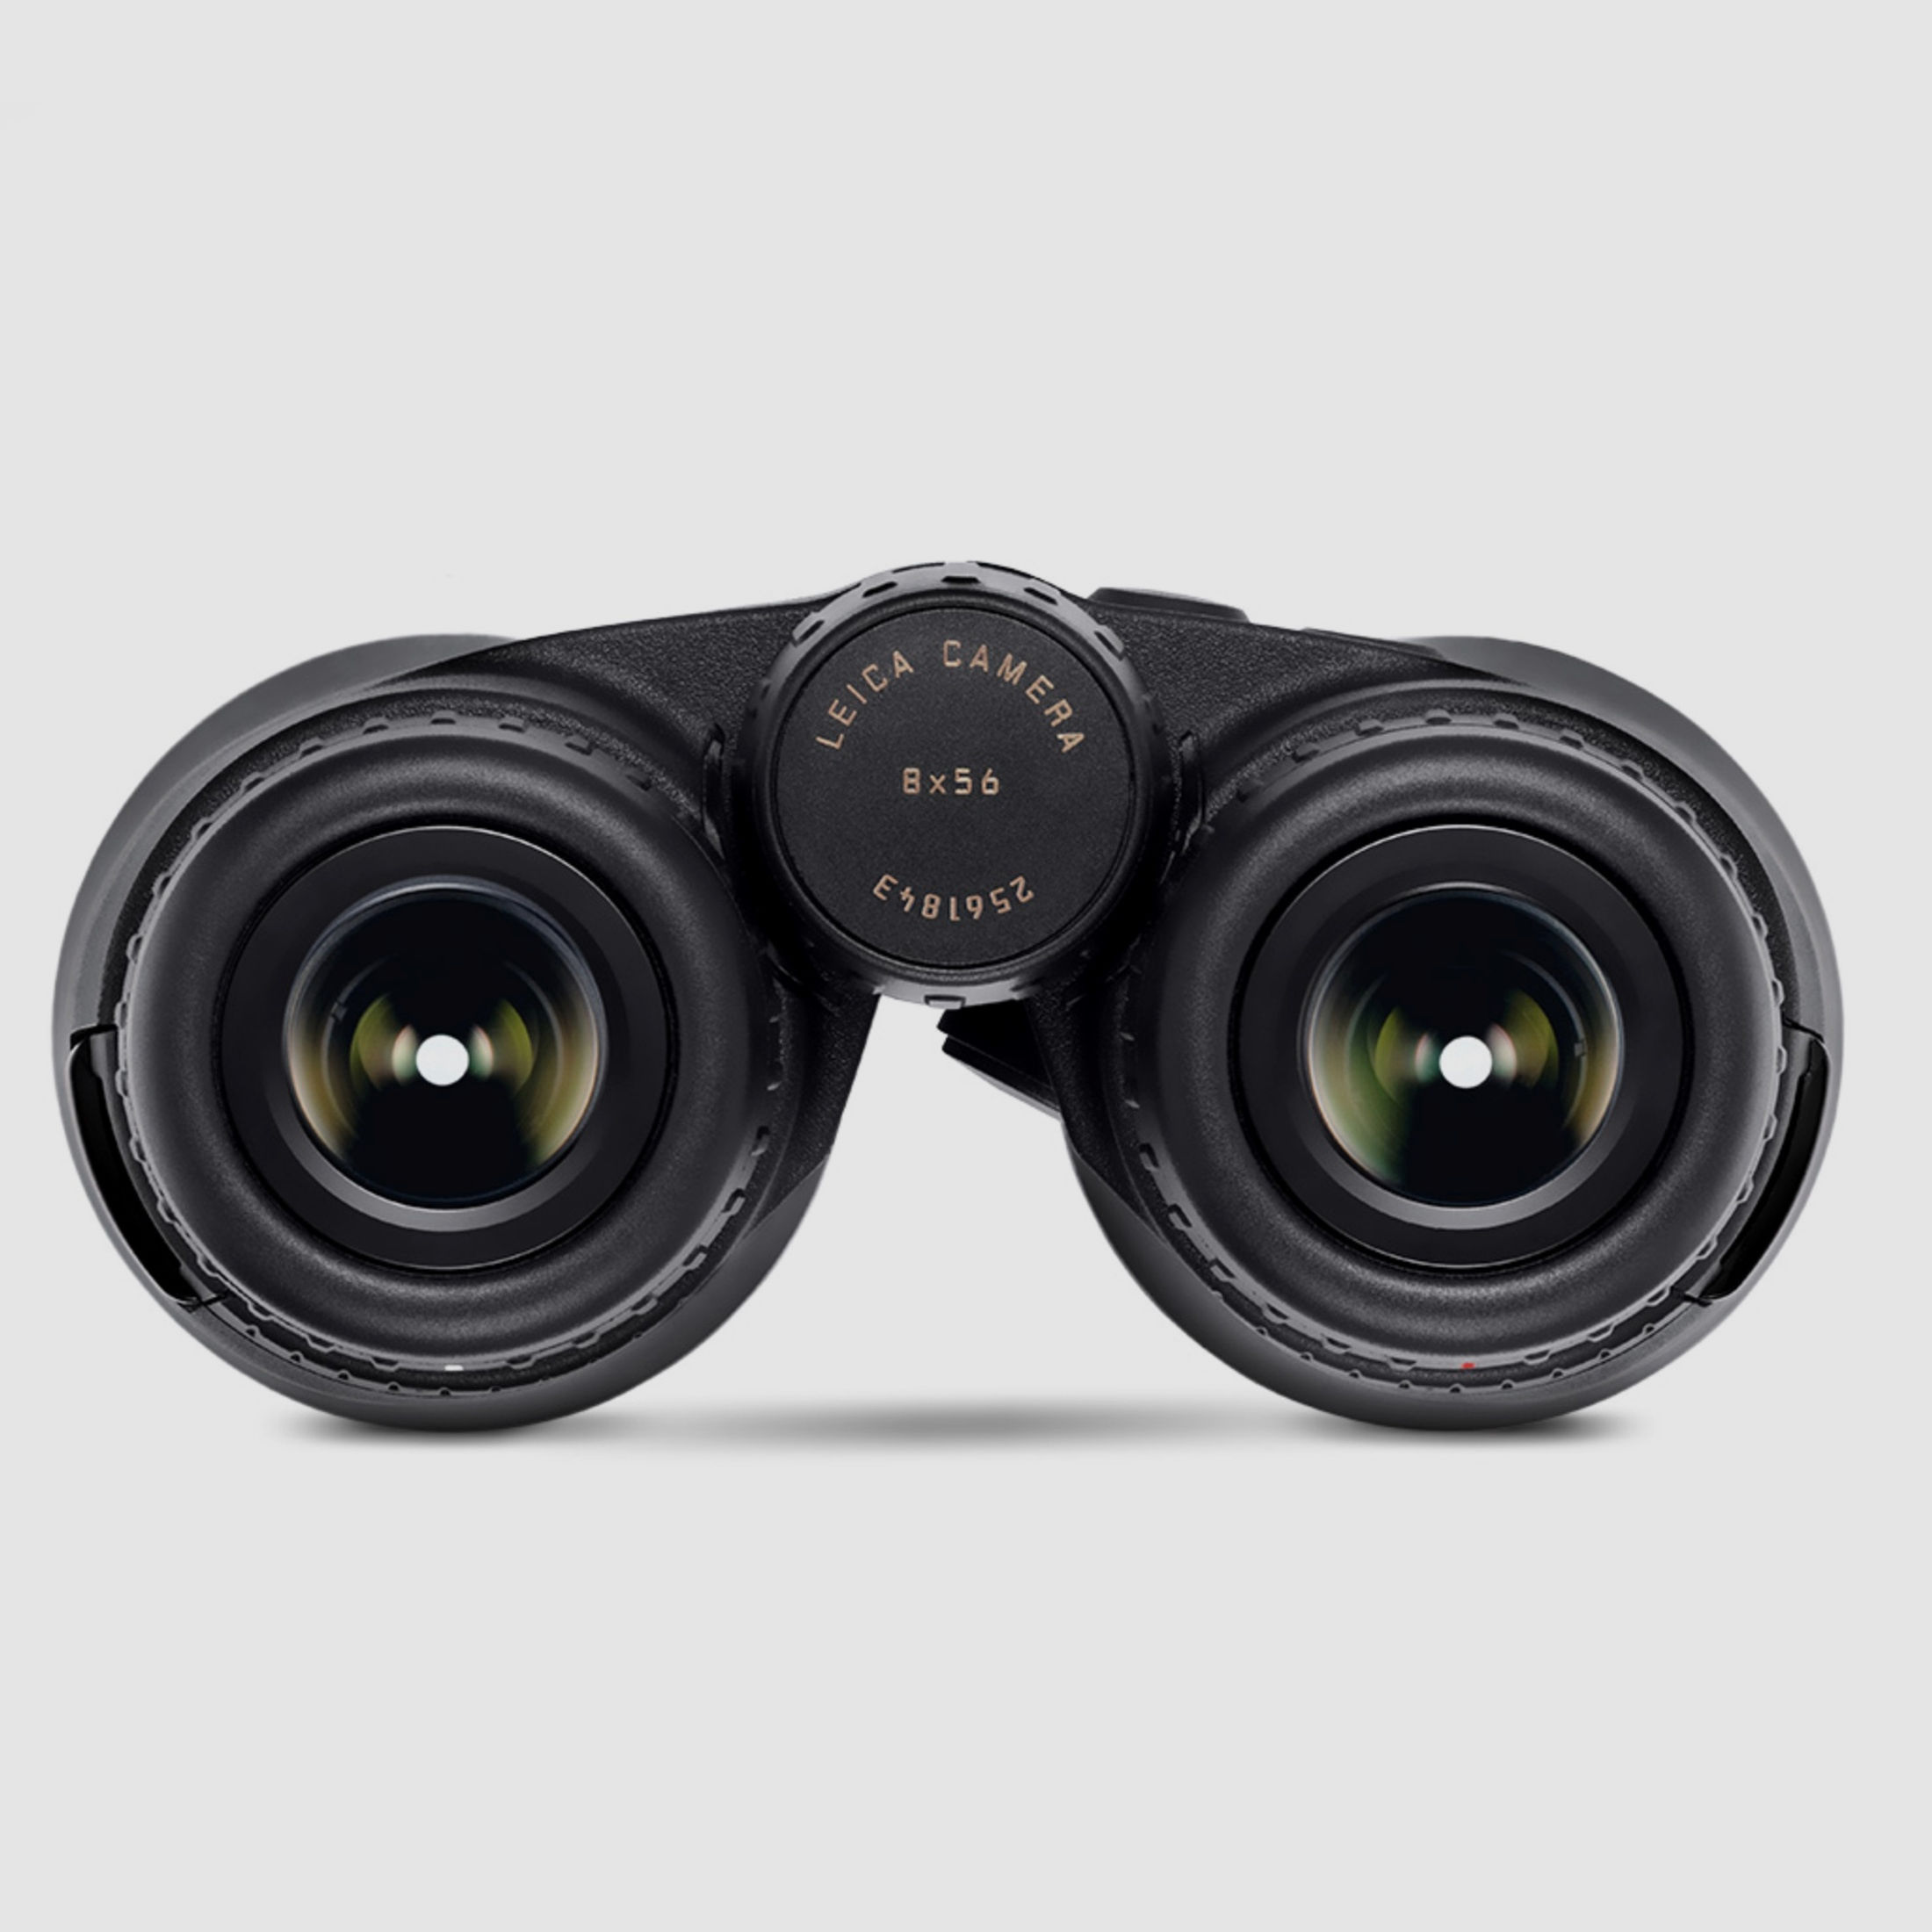 Leica Geovid R 8x56 Fernglas mit Entfernungsmesser 40813